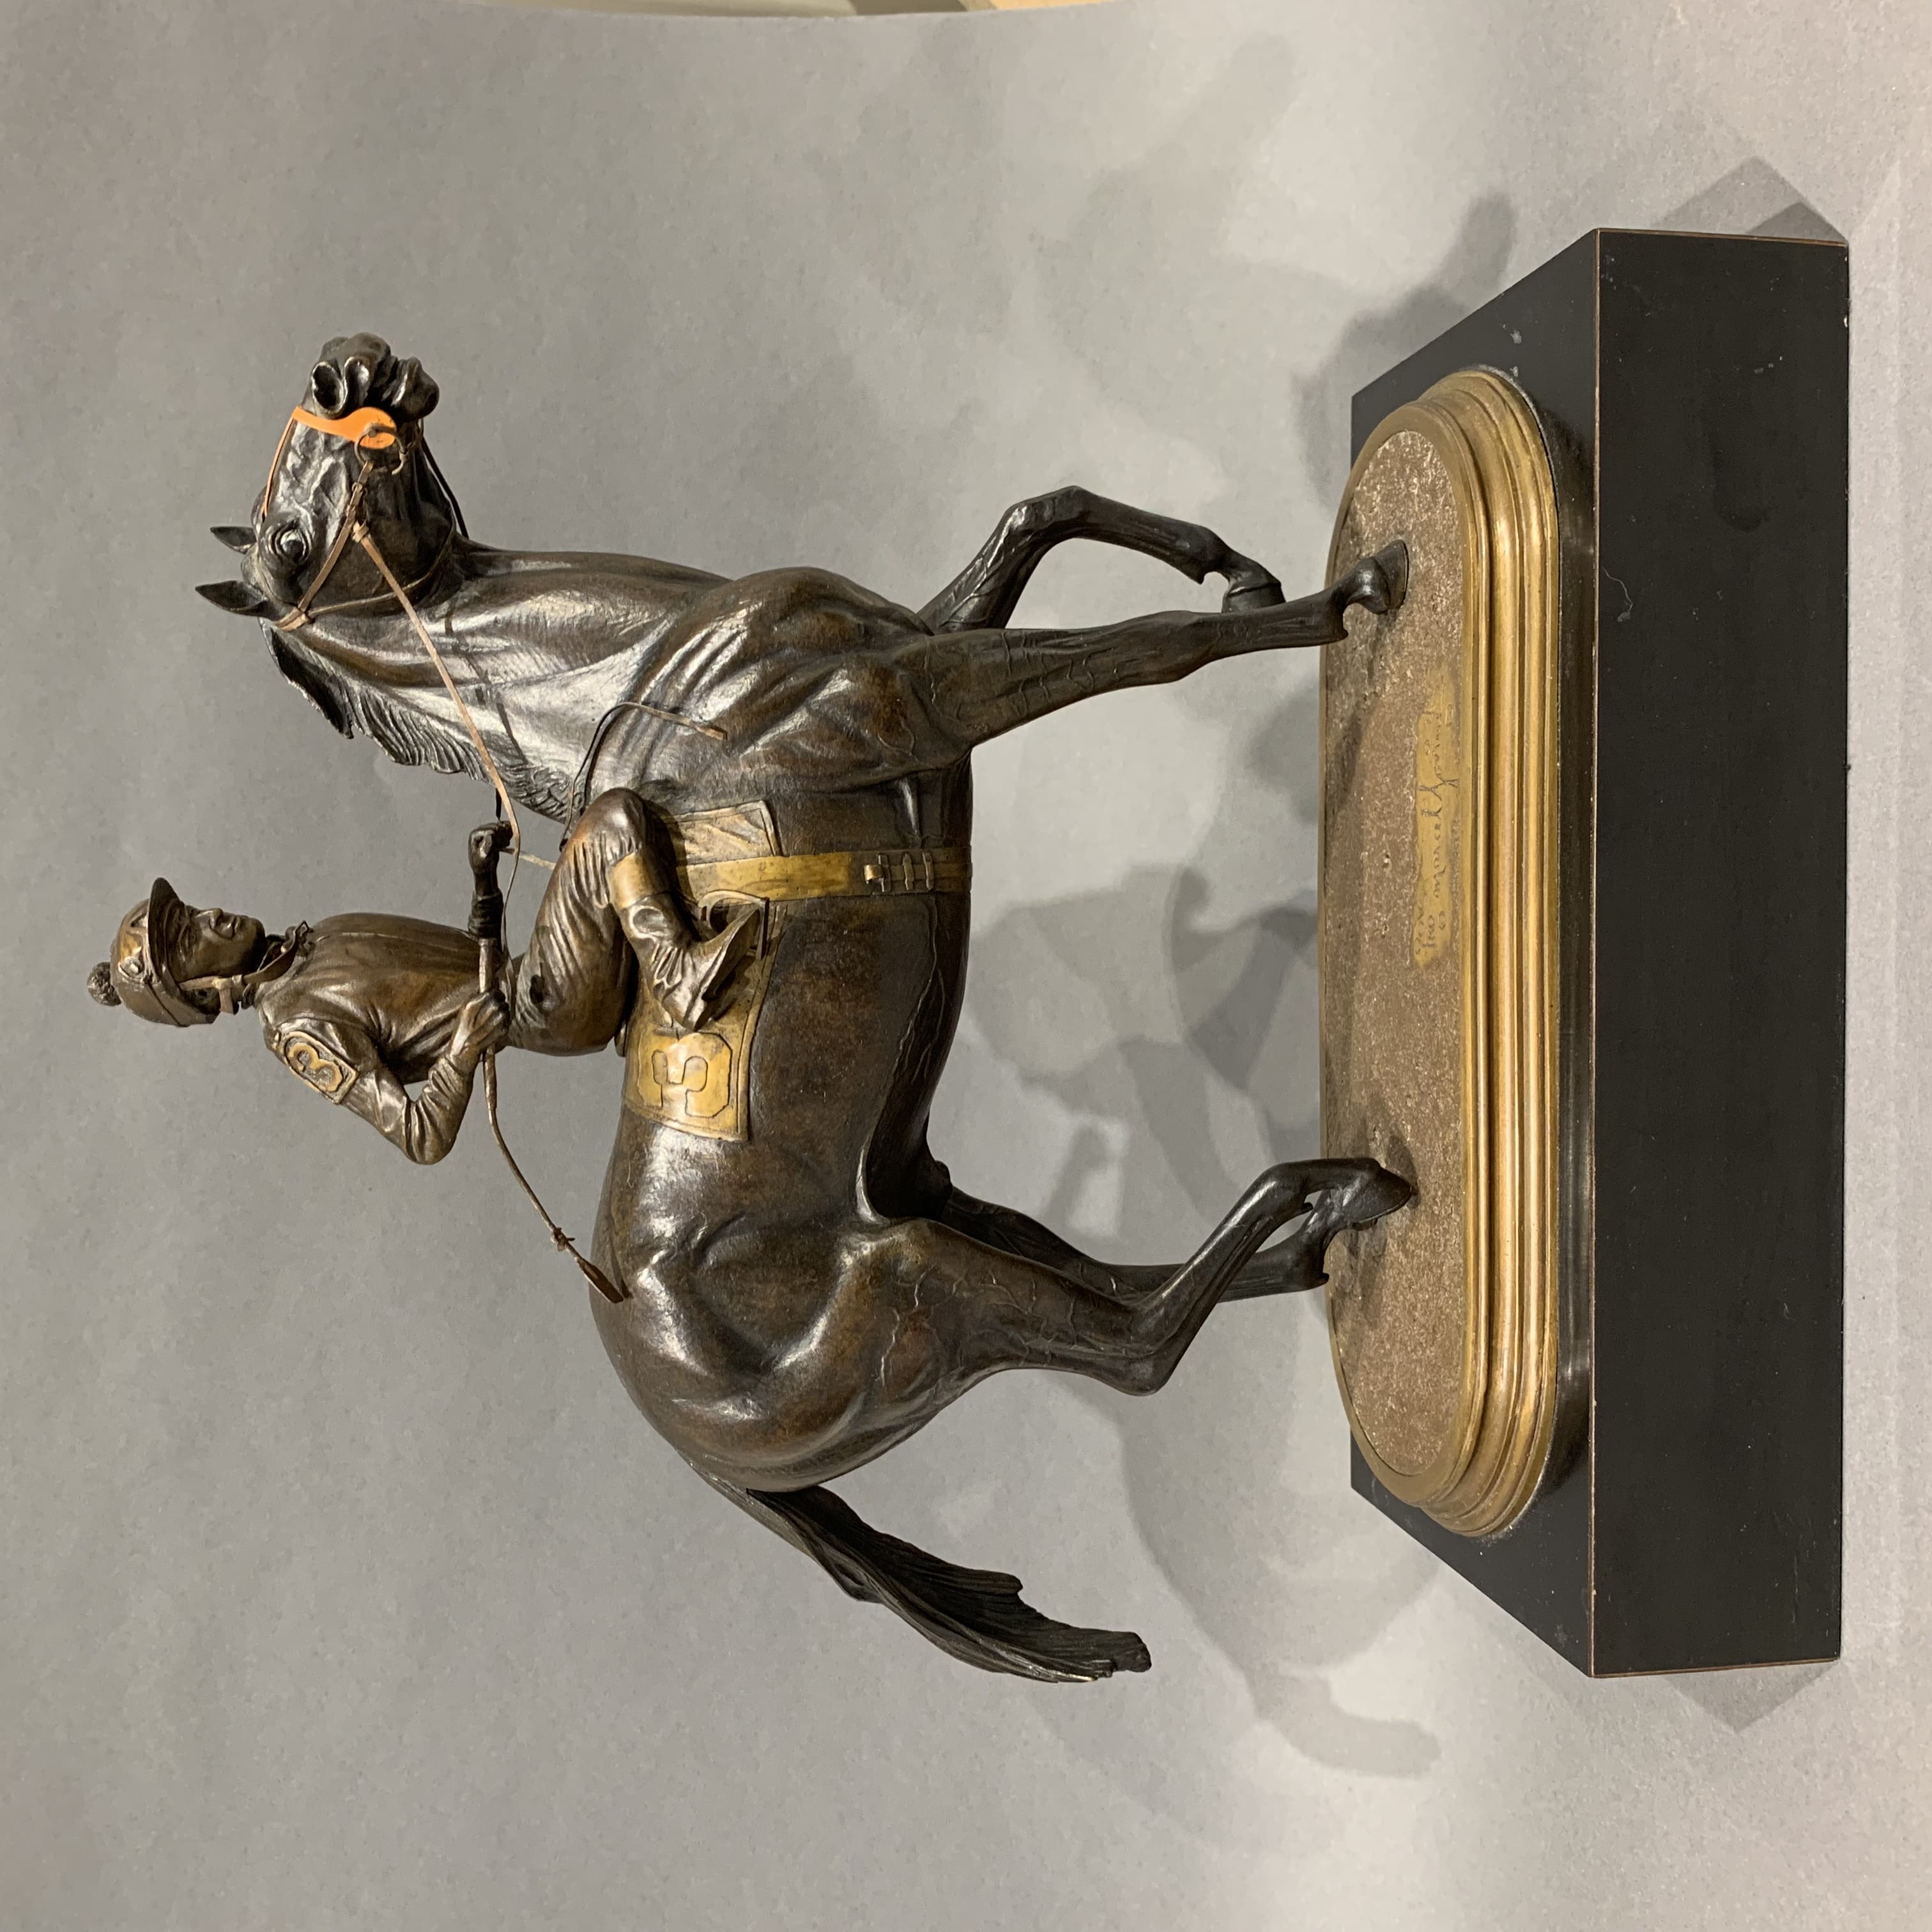 Marcel Jovine Bronze Equestrian Sculpture